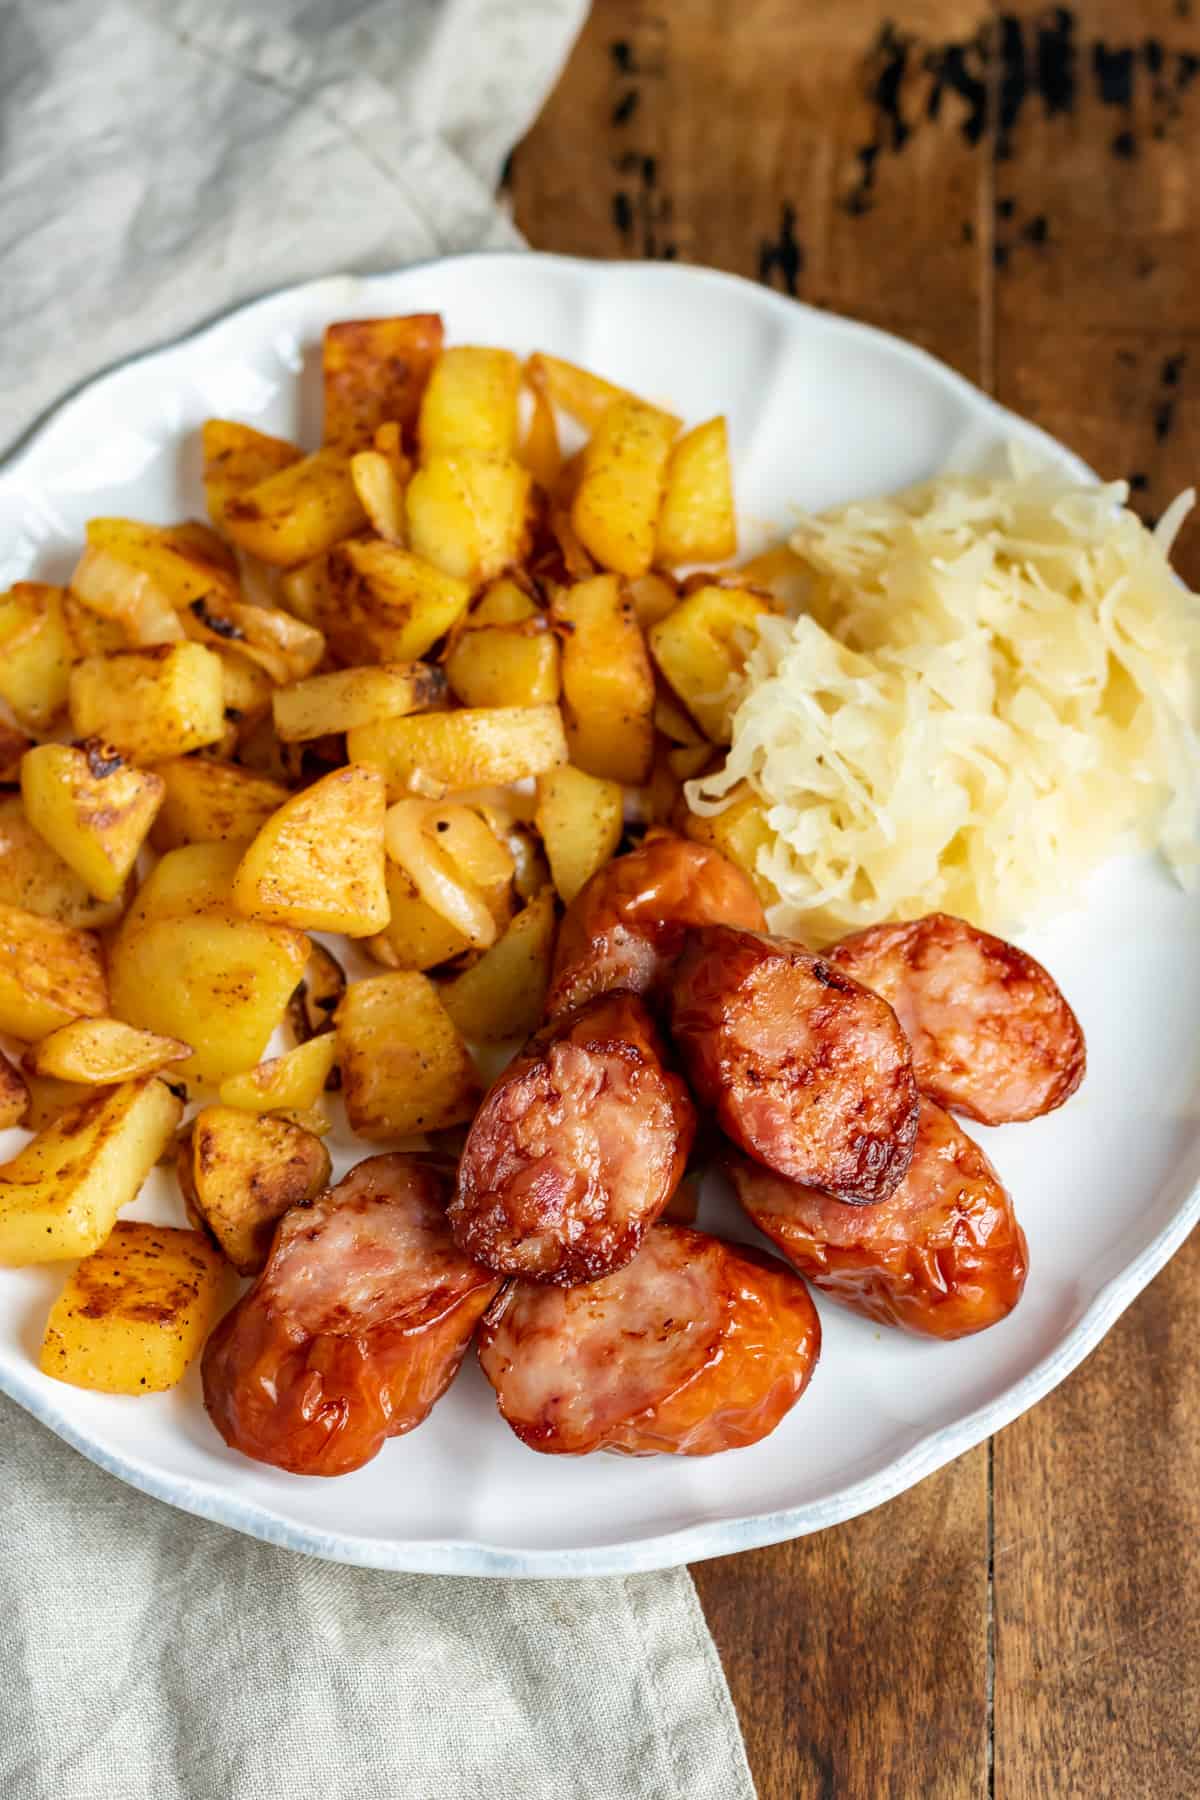 A plate of onions and potatoes, sauerkraut and air fried kielbasa.